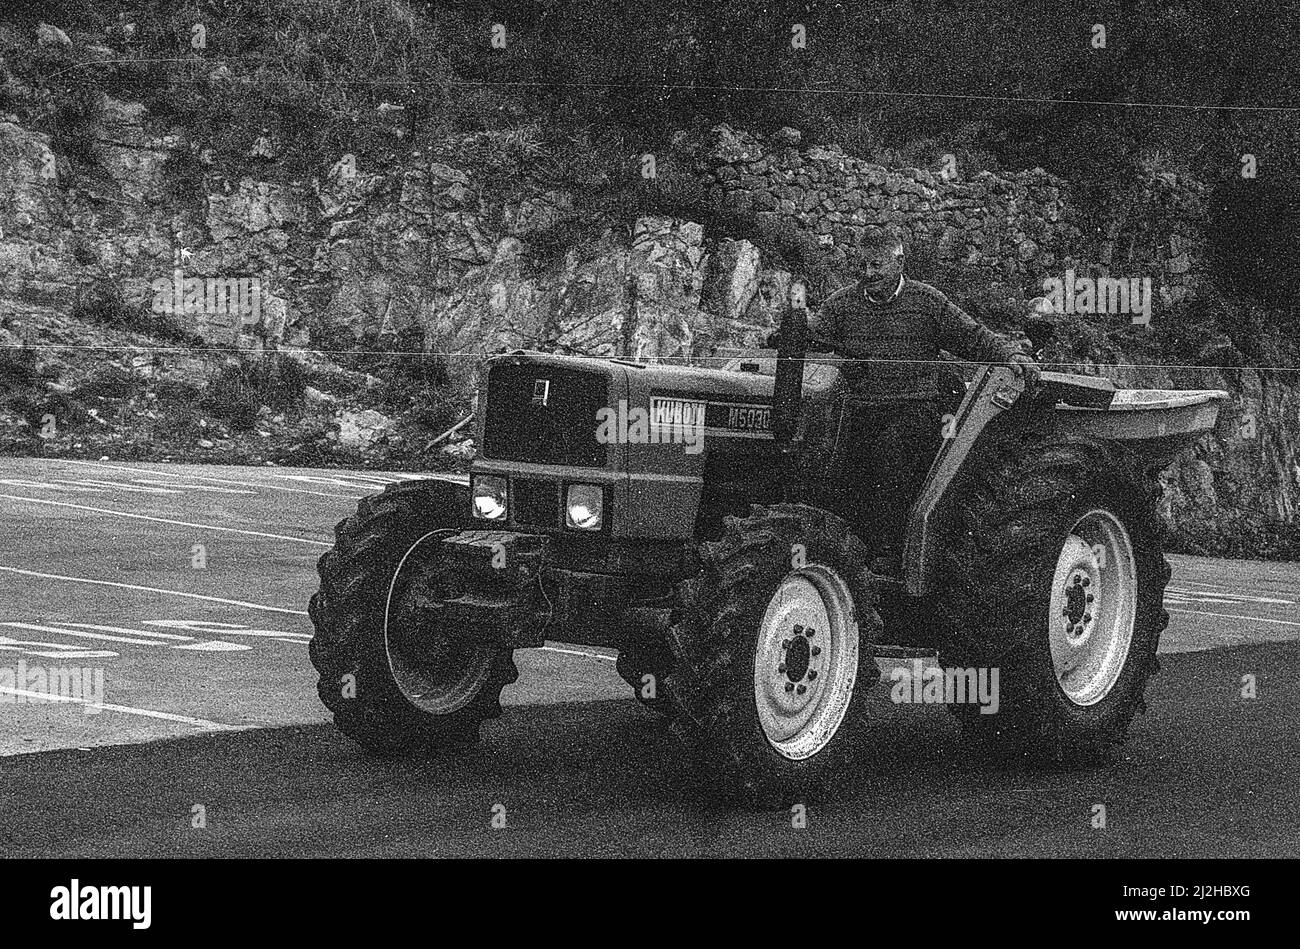 Kubota tractor in Banque d'images noir et blanc - Alamy